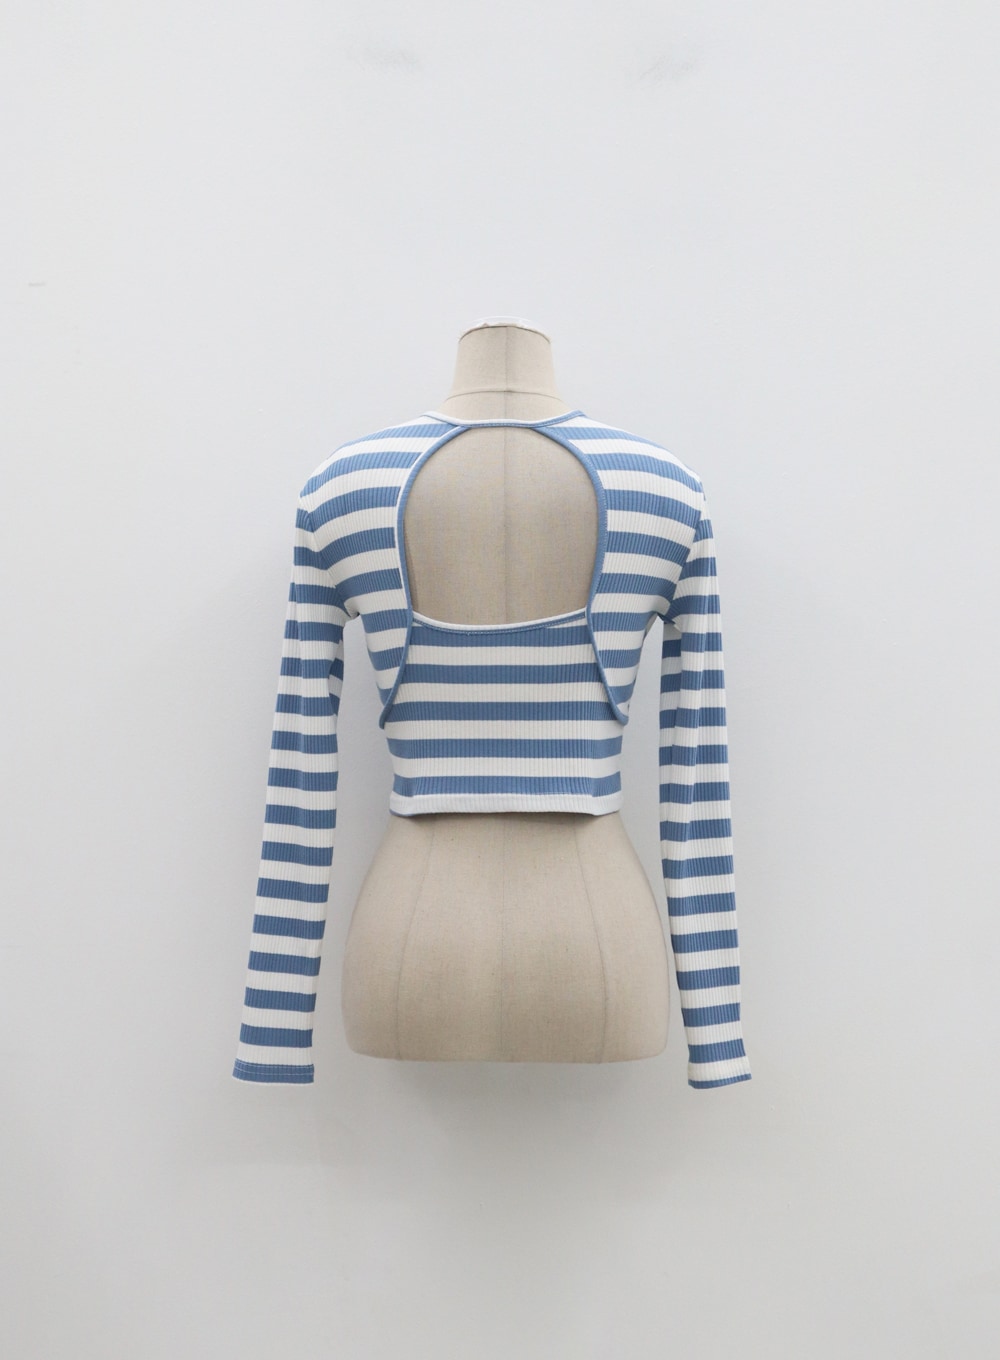 Stripe Top And Skirt Set IM329